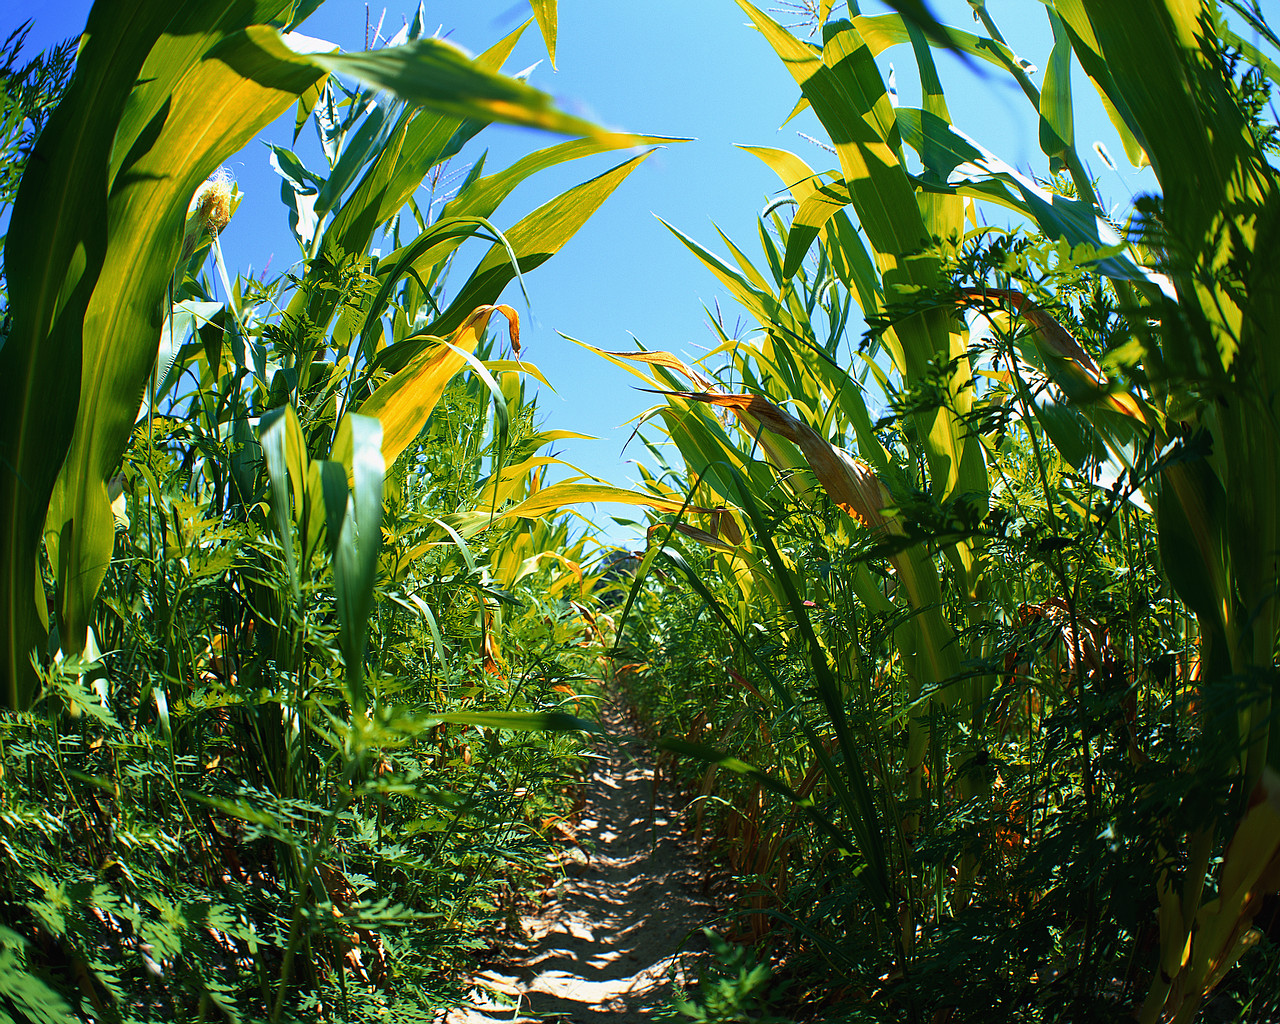 Maize field, Nebraska, USA.